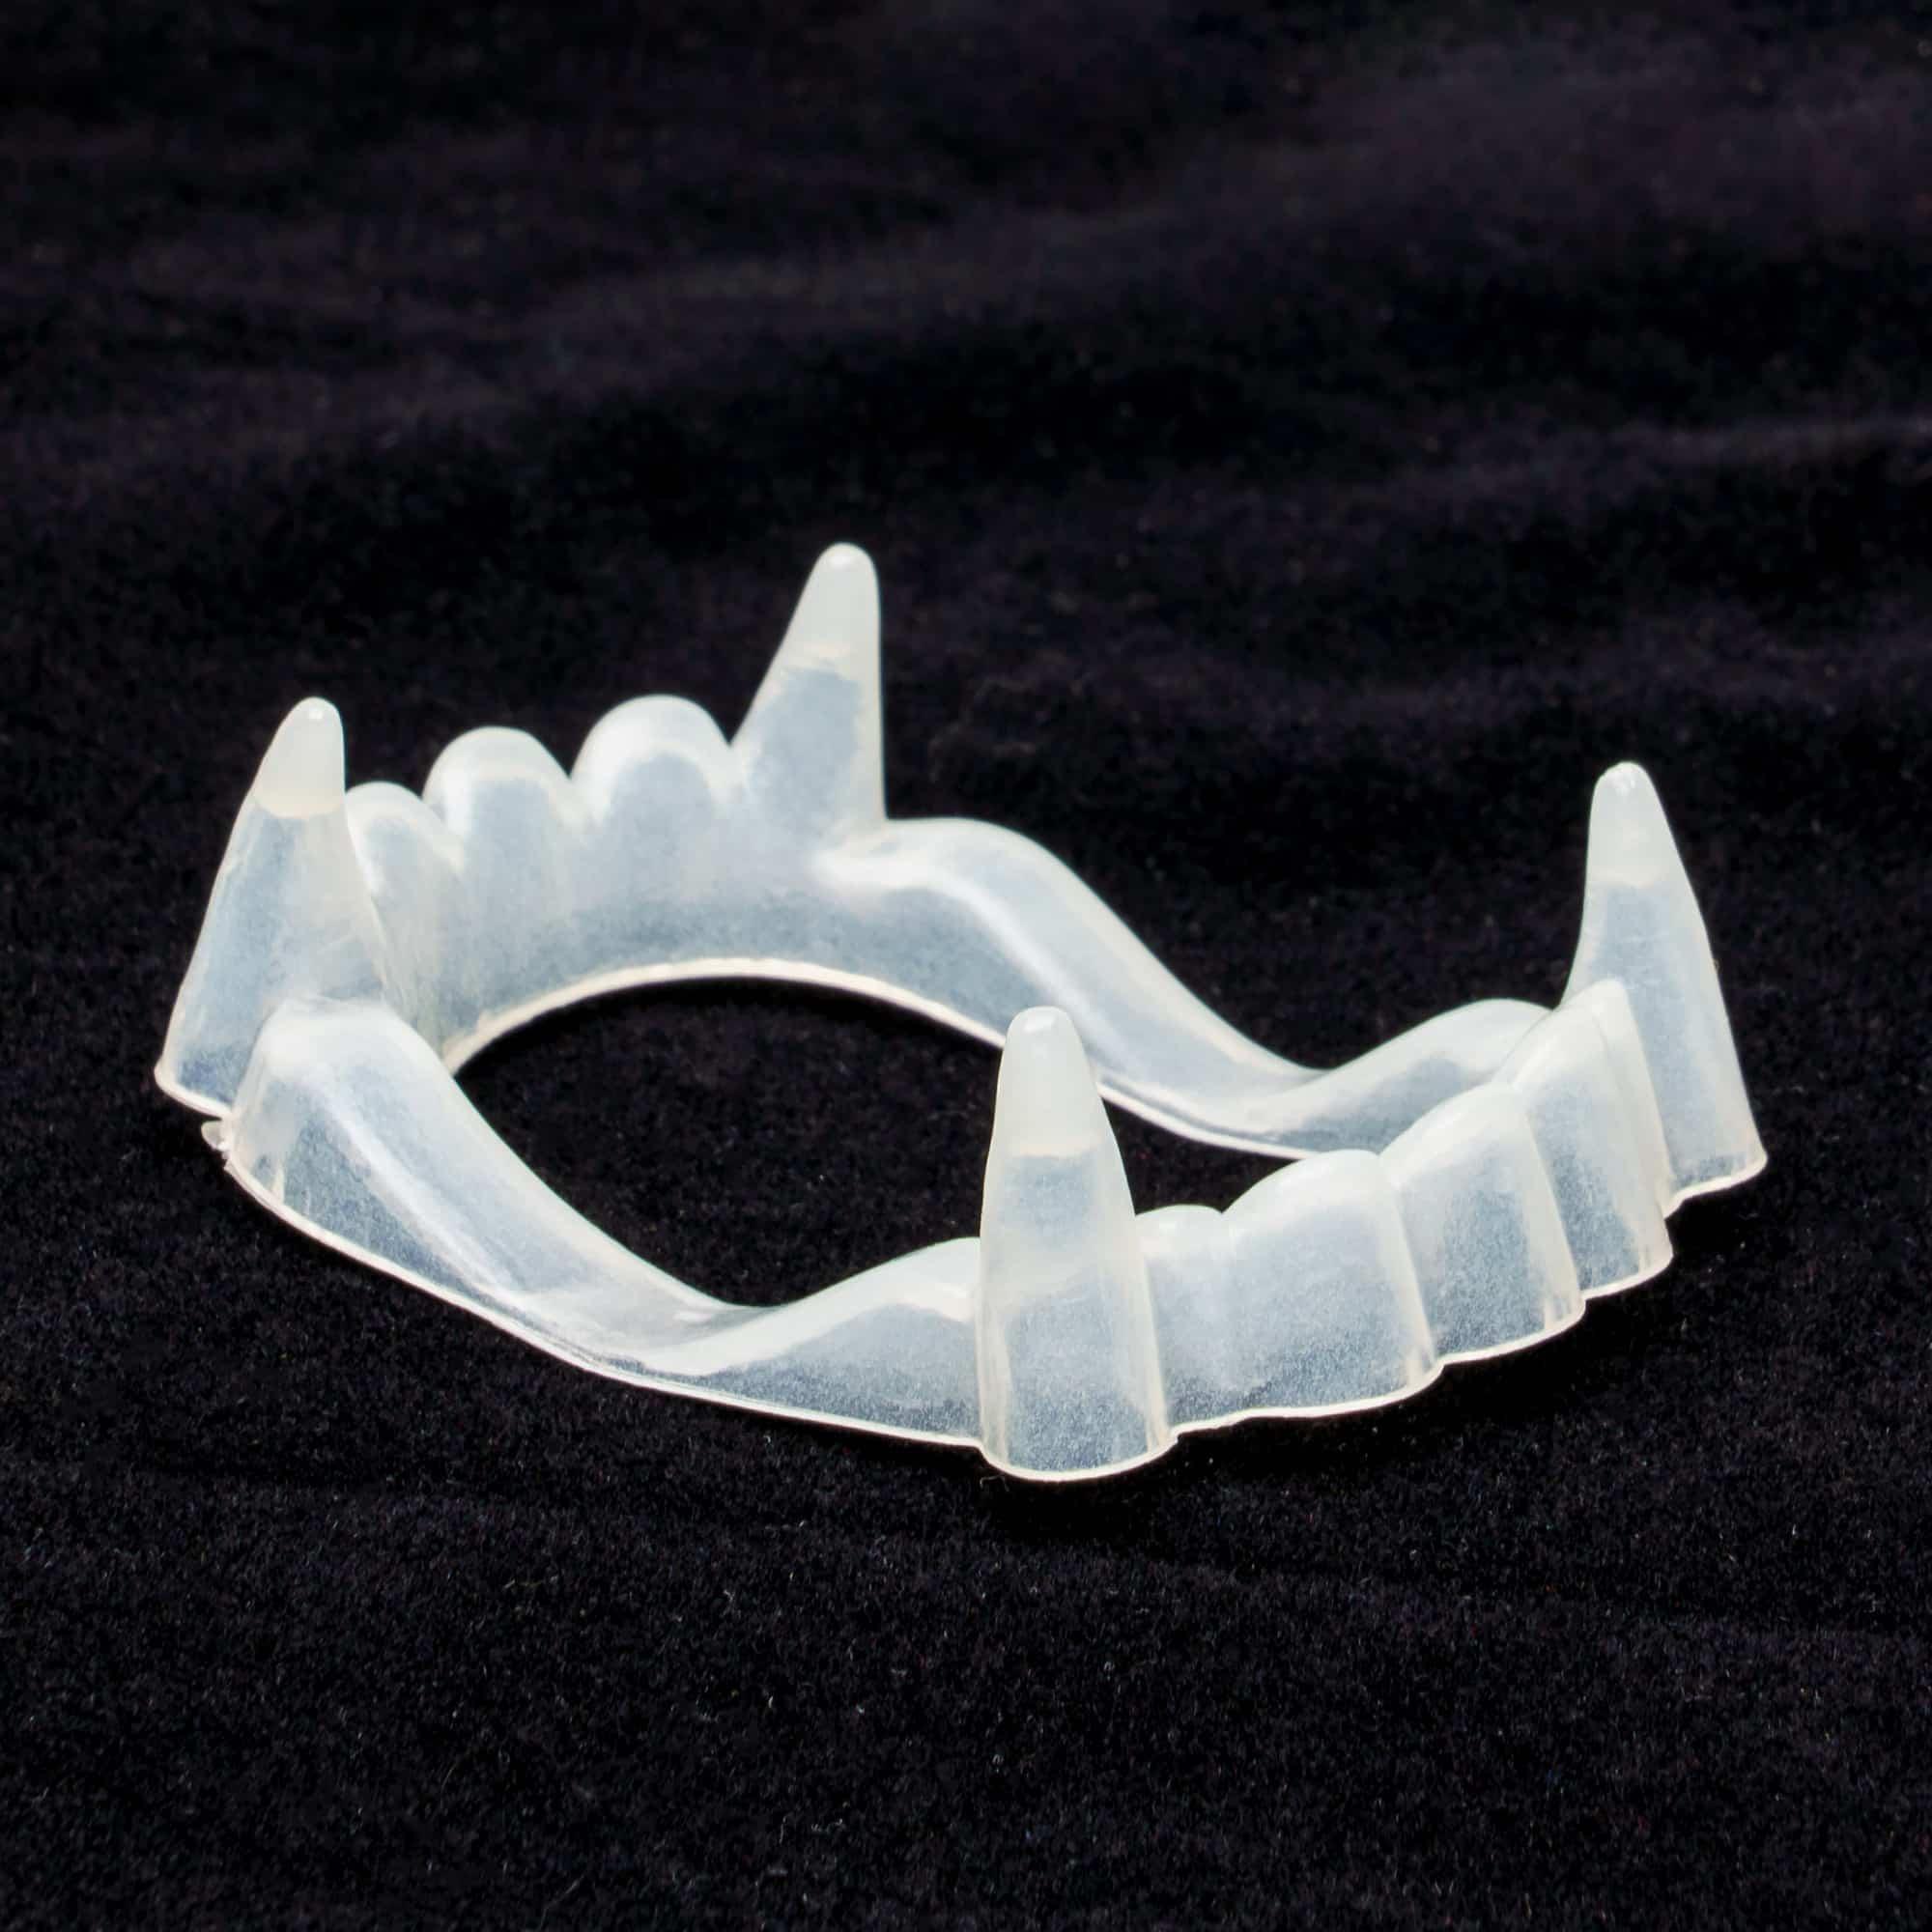 Weirdo's Glow-in-the-Dark Vampire Teeth